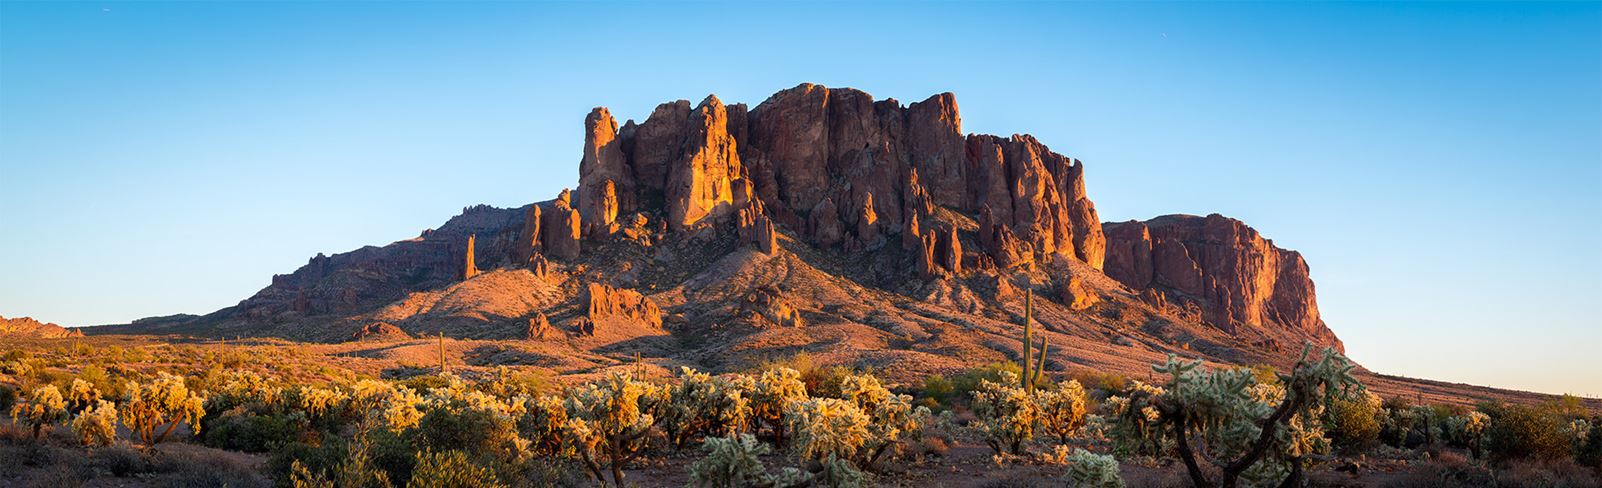 Mesa Arizona desert mountains near Blossom Rock community